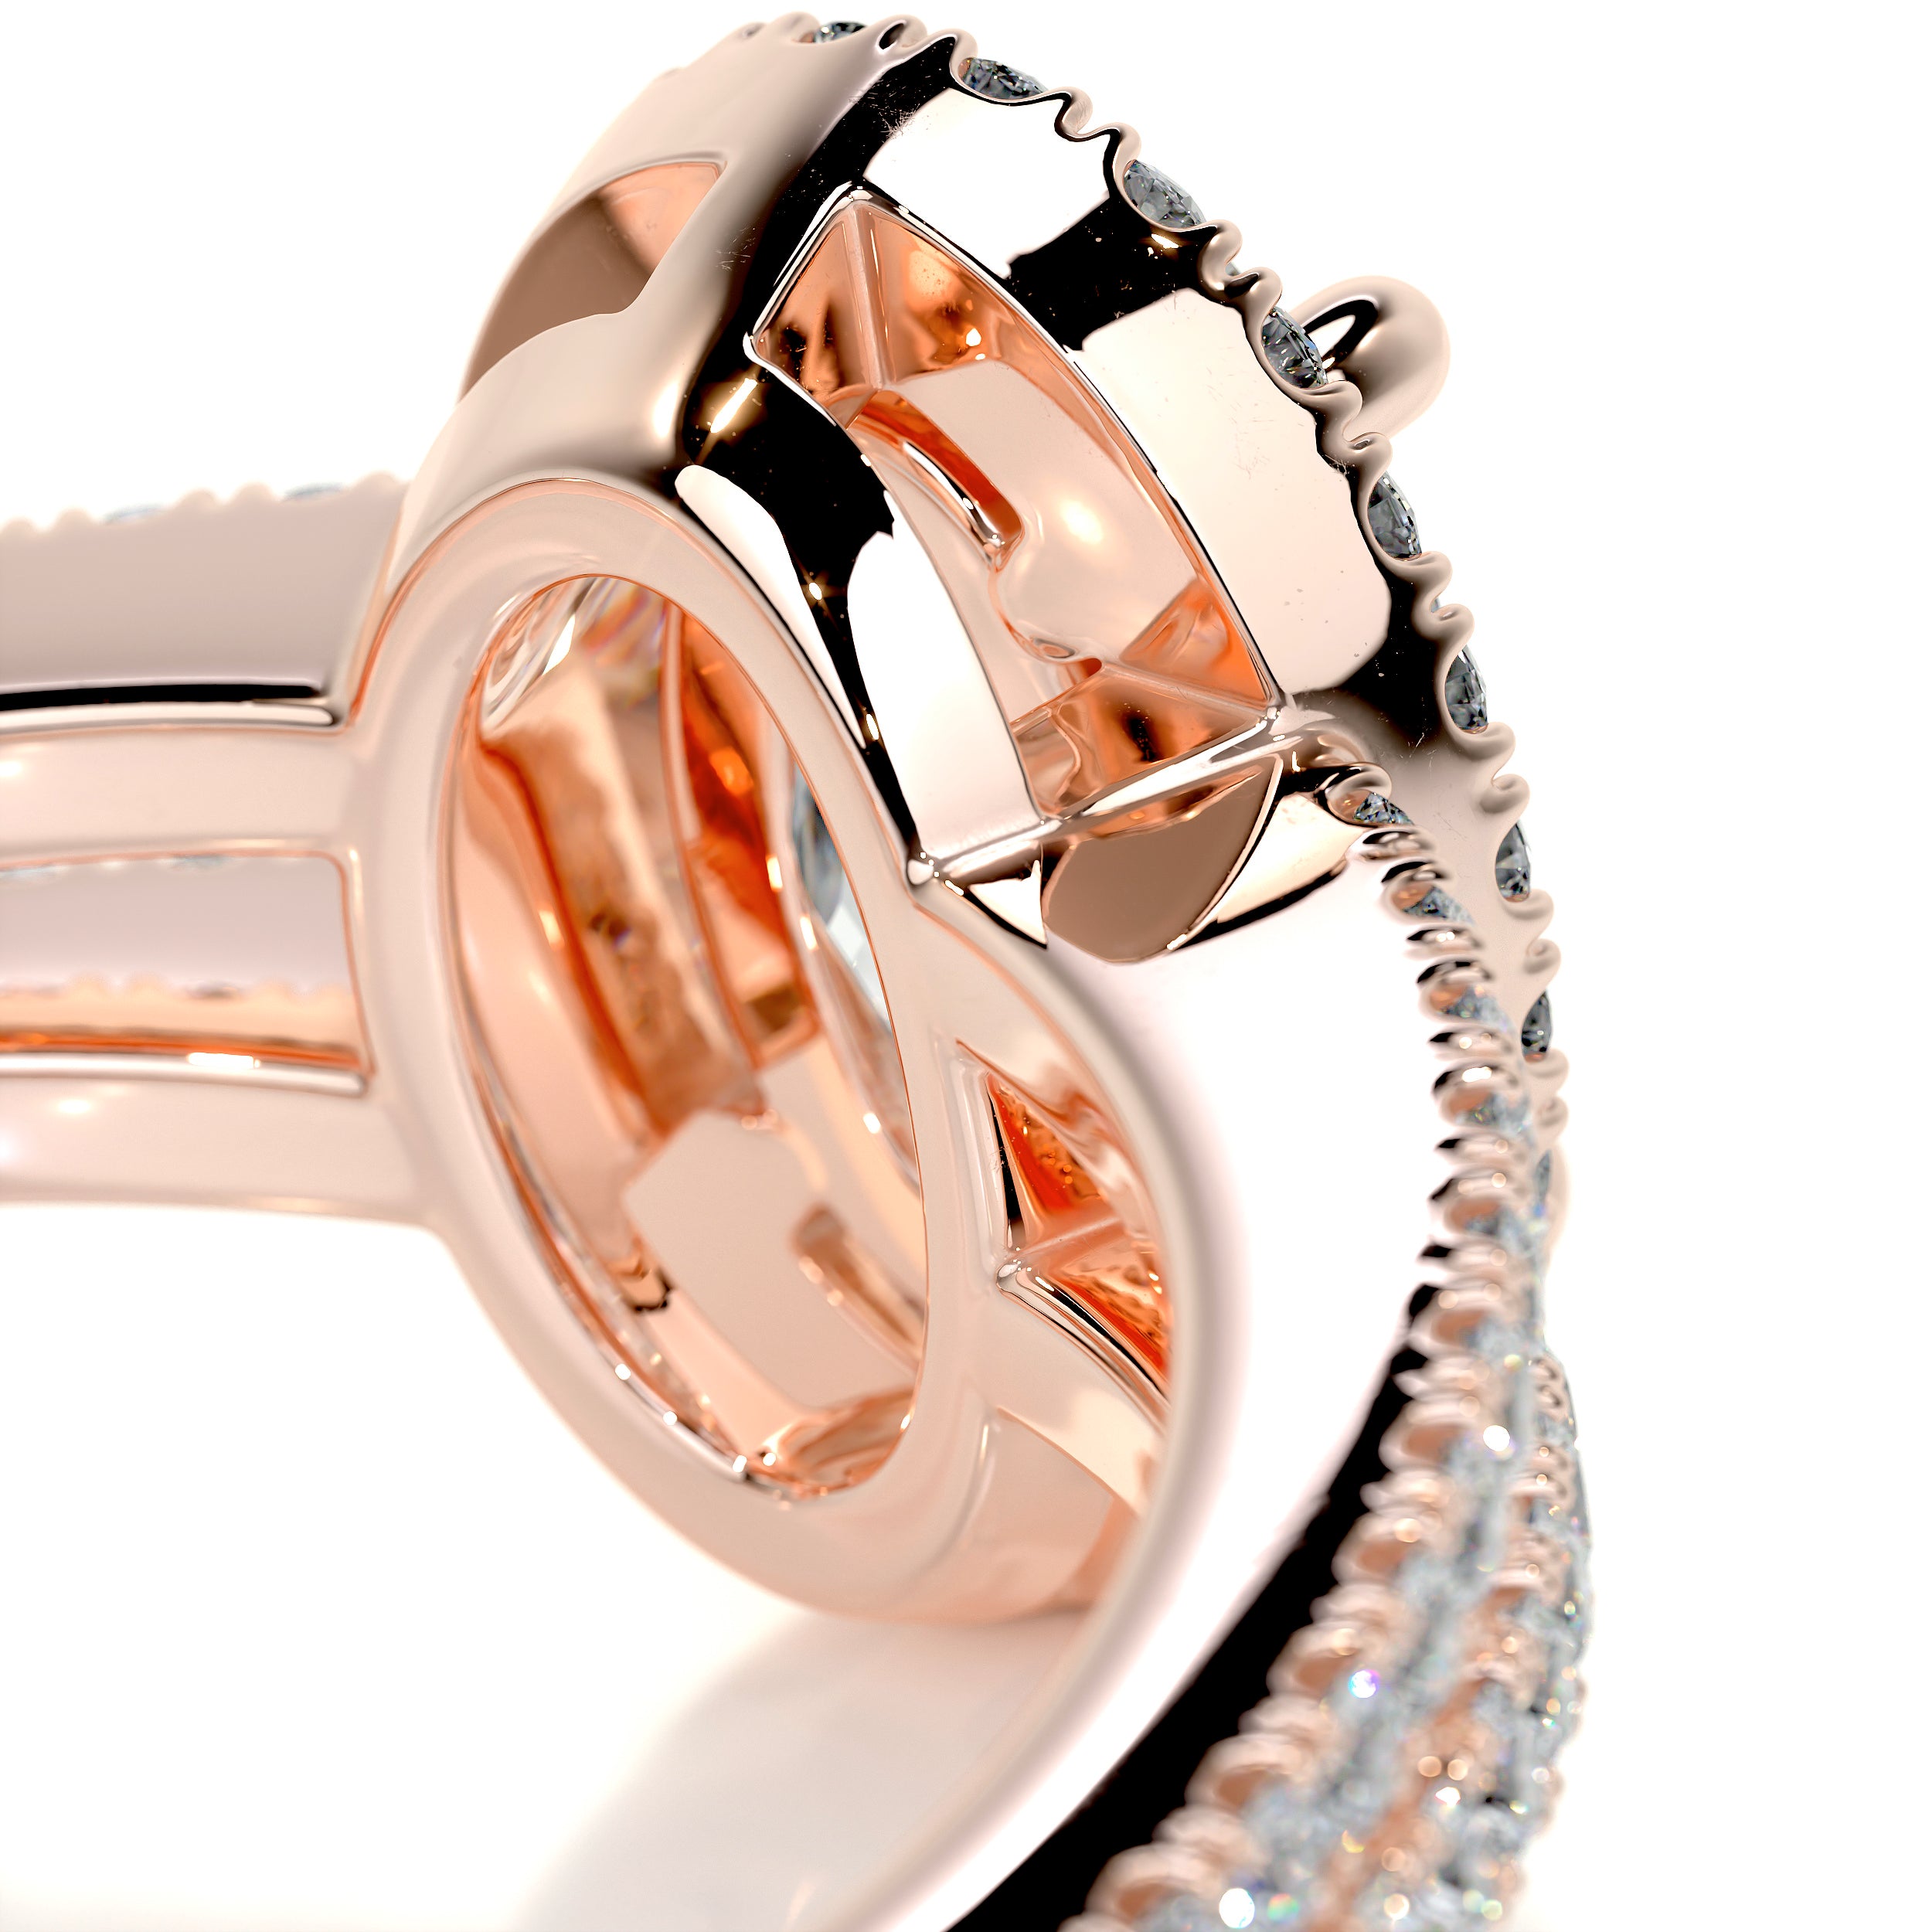 Brielle Diamond Engagement Ring   (1.2 Carat) -14K Rose Gold